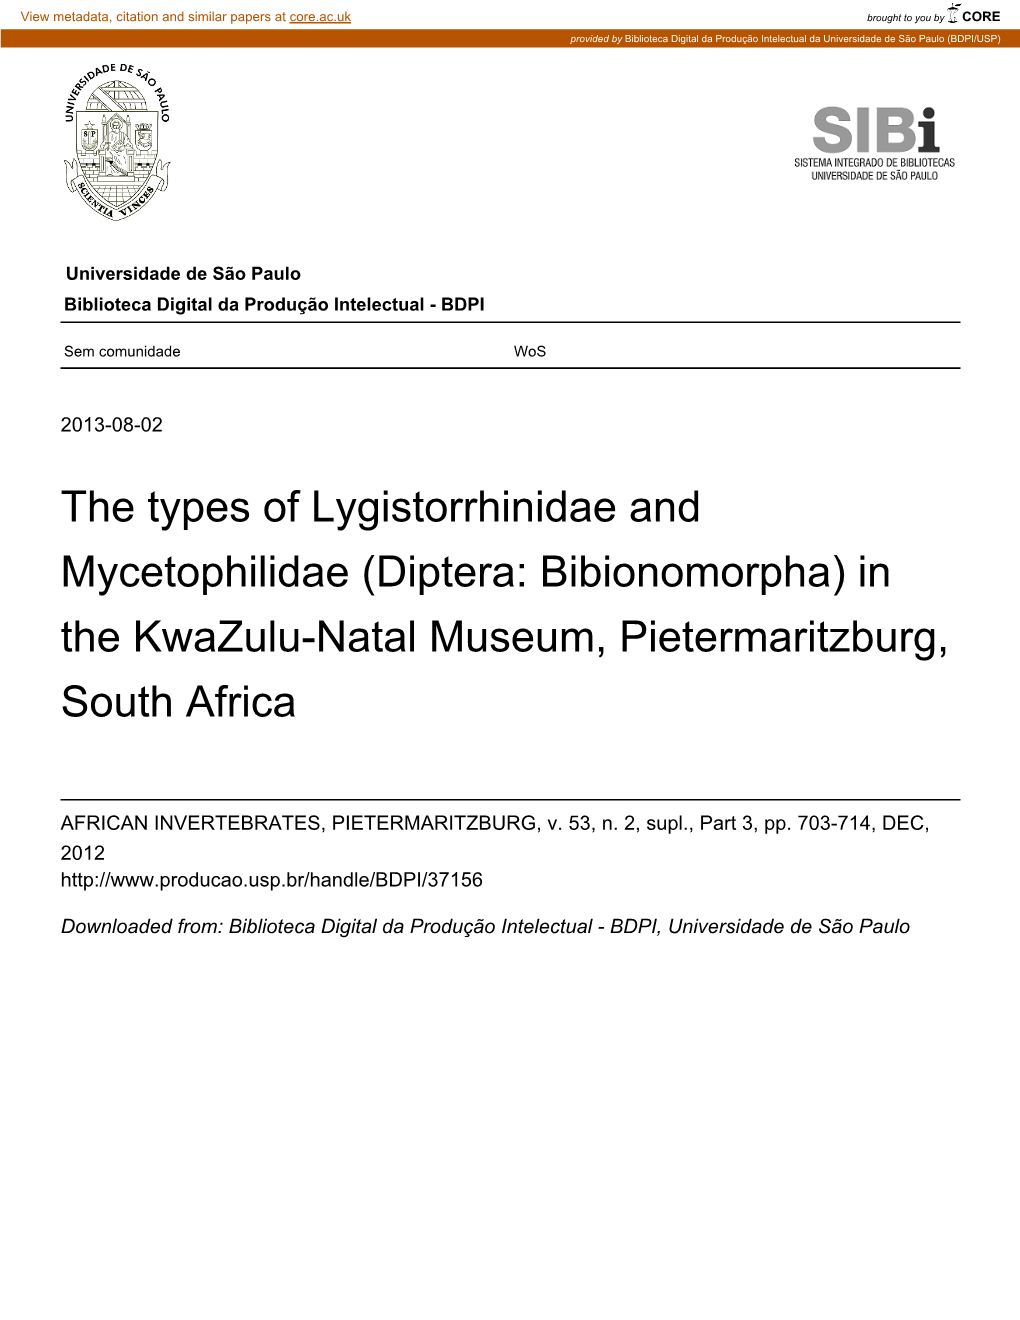 Diptera: Bibionomorpha) in the Kwazulu-Natal Museum, Pietermaritzburg, South Africa